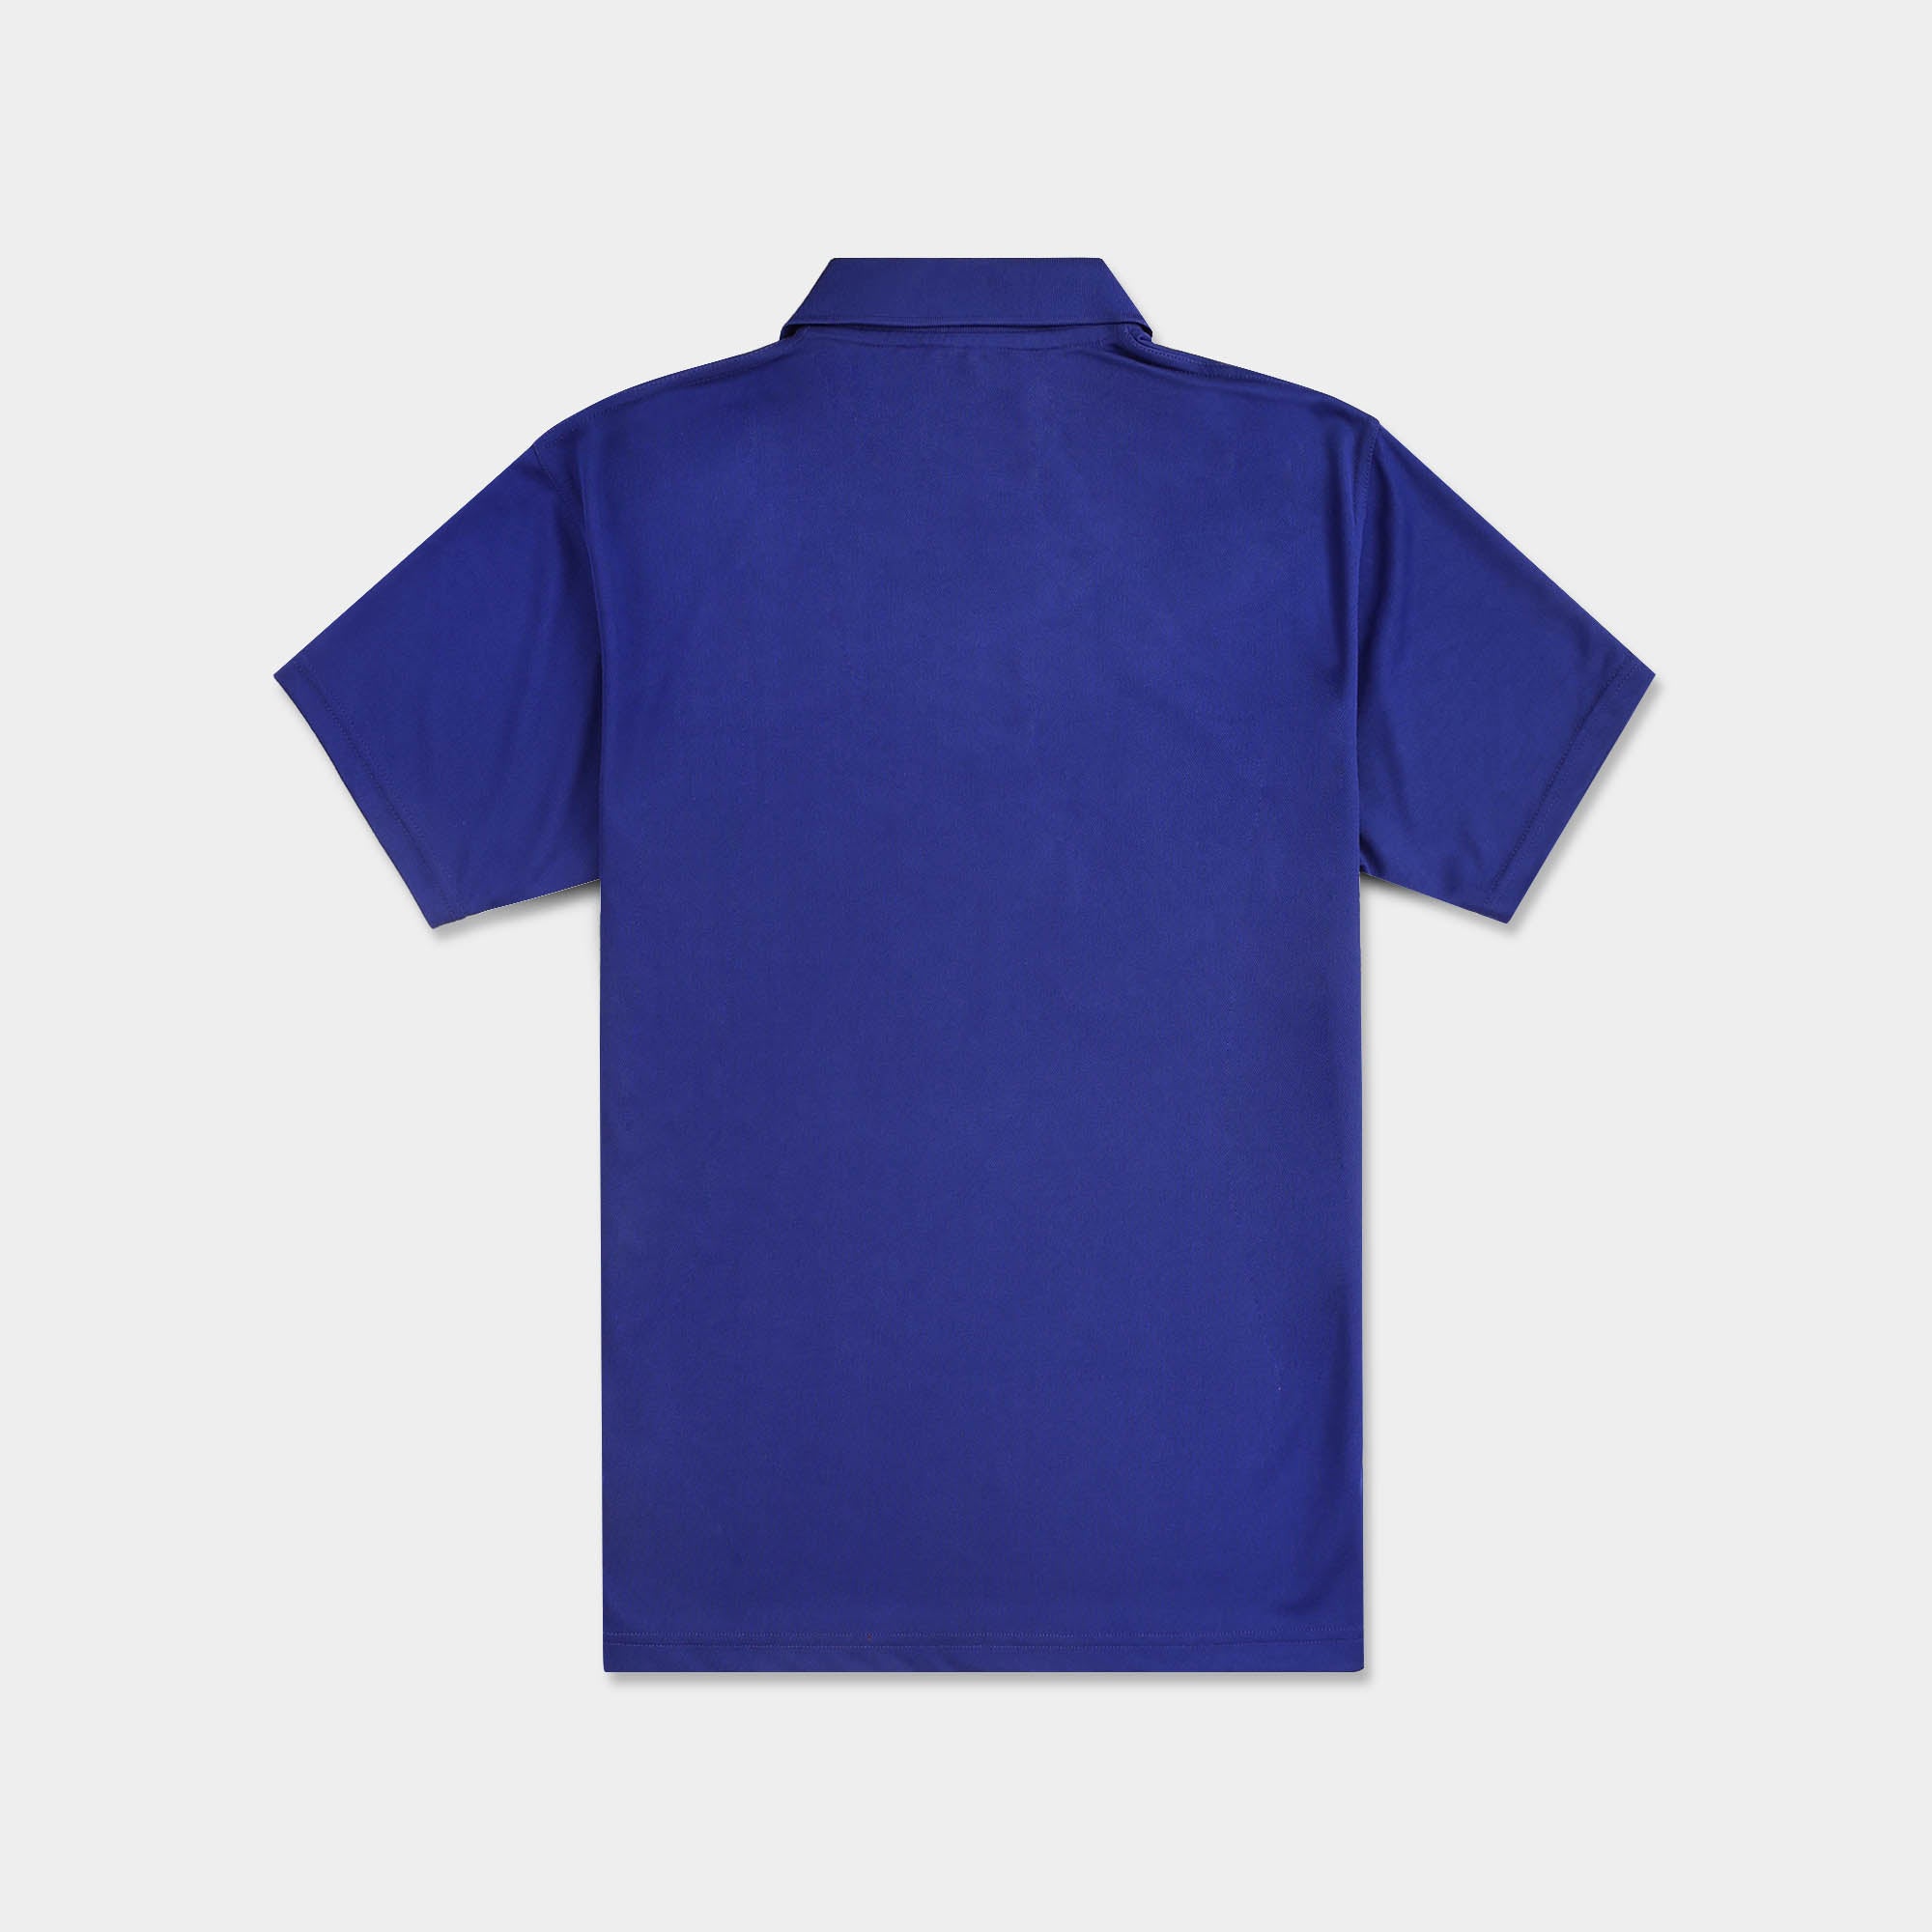 mens polo shirts_sports polos_golf polo_polo t shirts for men_custom polo shirts_cheap polo shirts_polo shirts on sale_designer polo shirts_Royal Blue